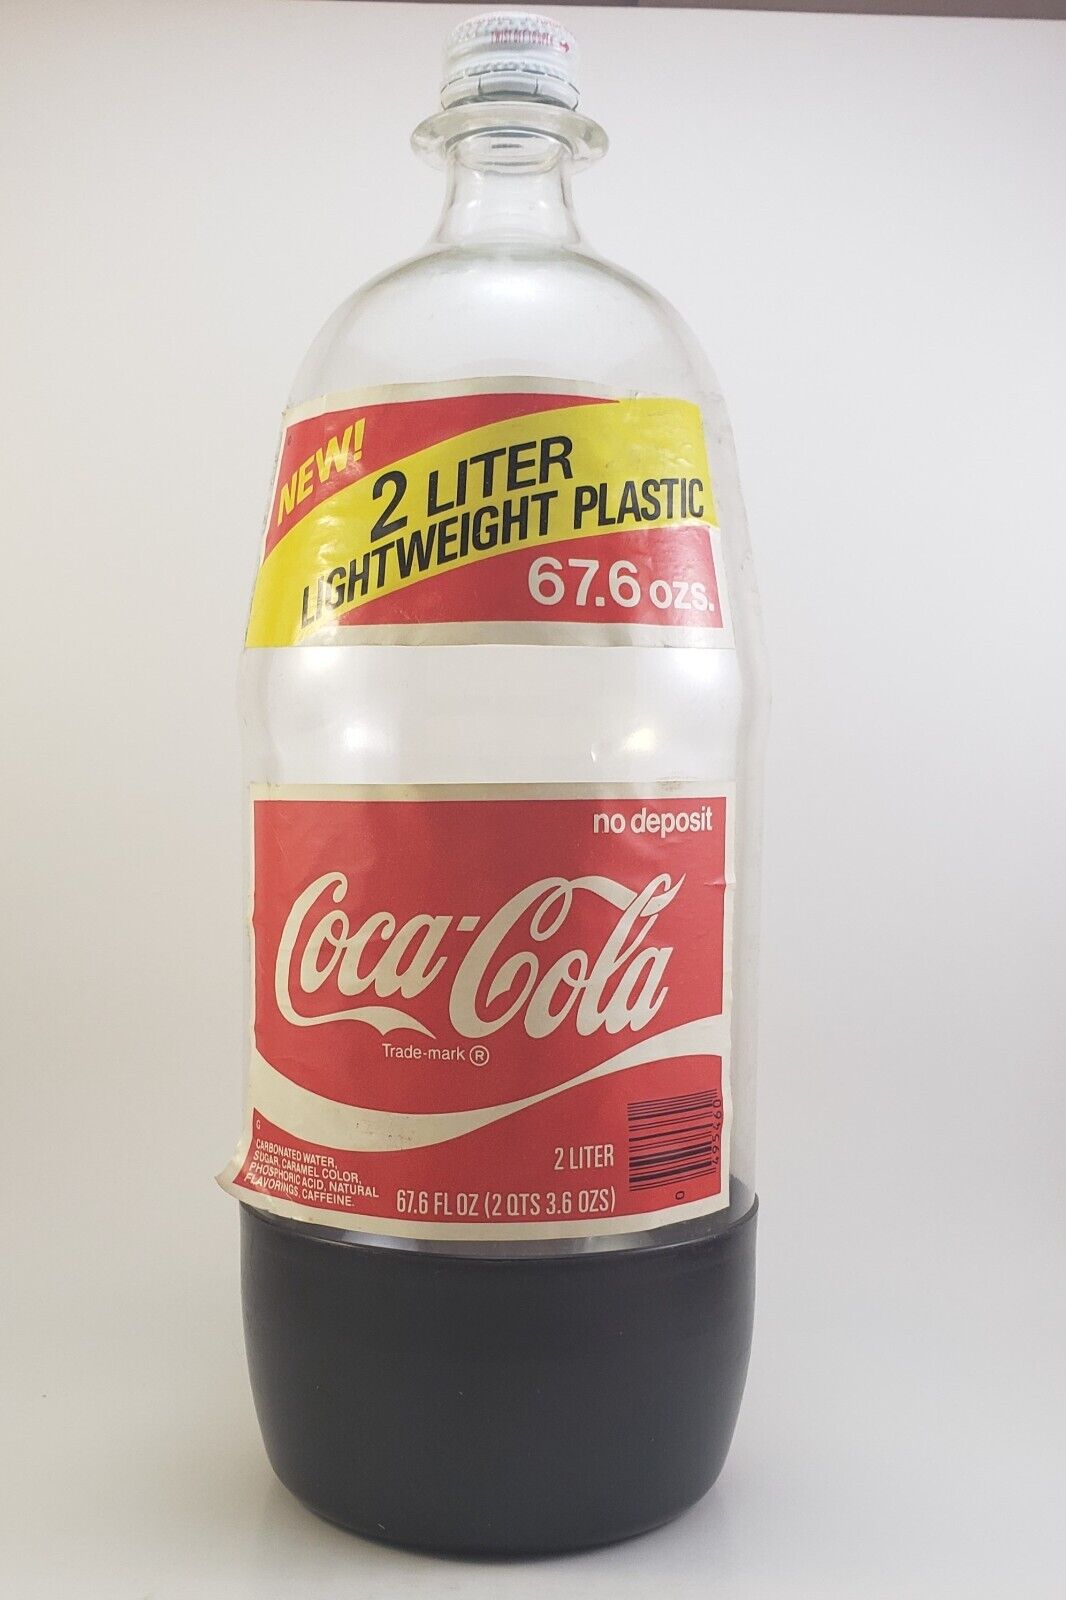 Rare Coca-Cola New 2 Liter Lightweight Plastic  67.6 ozs Plastic Bottle  1980s